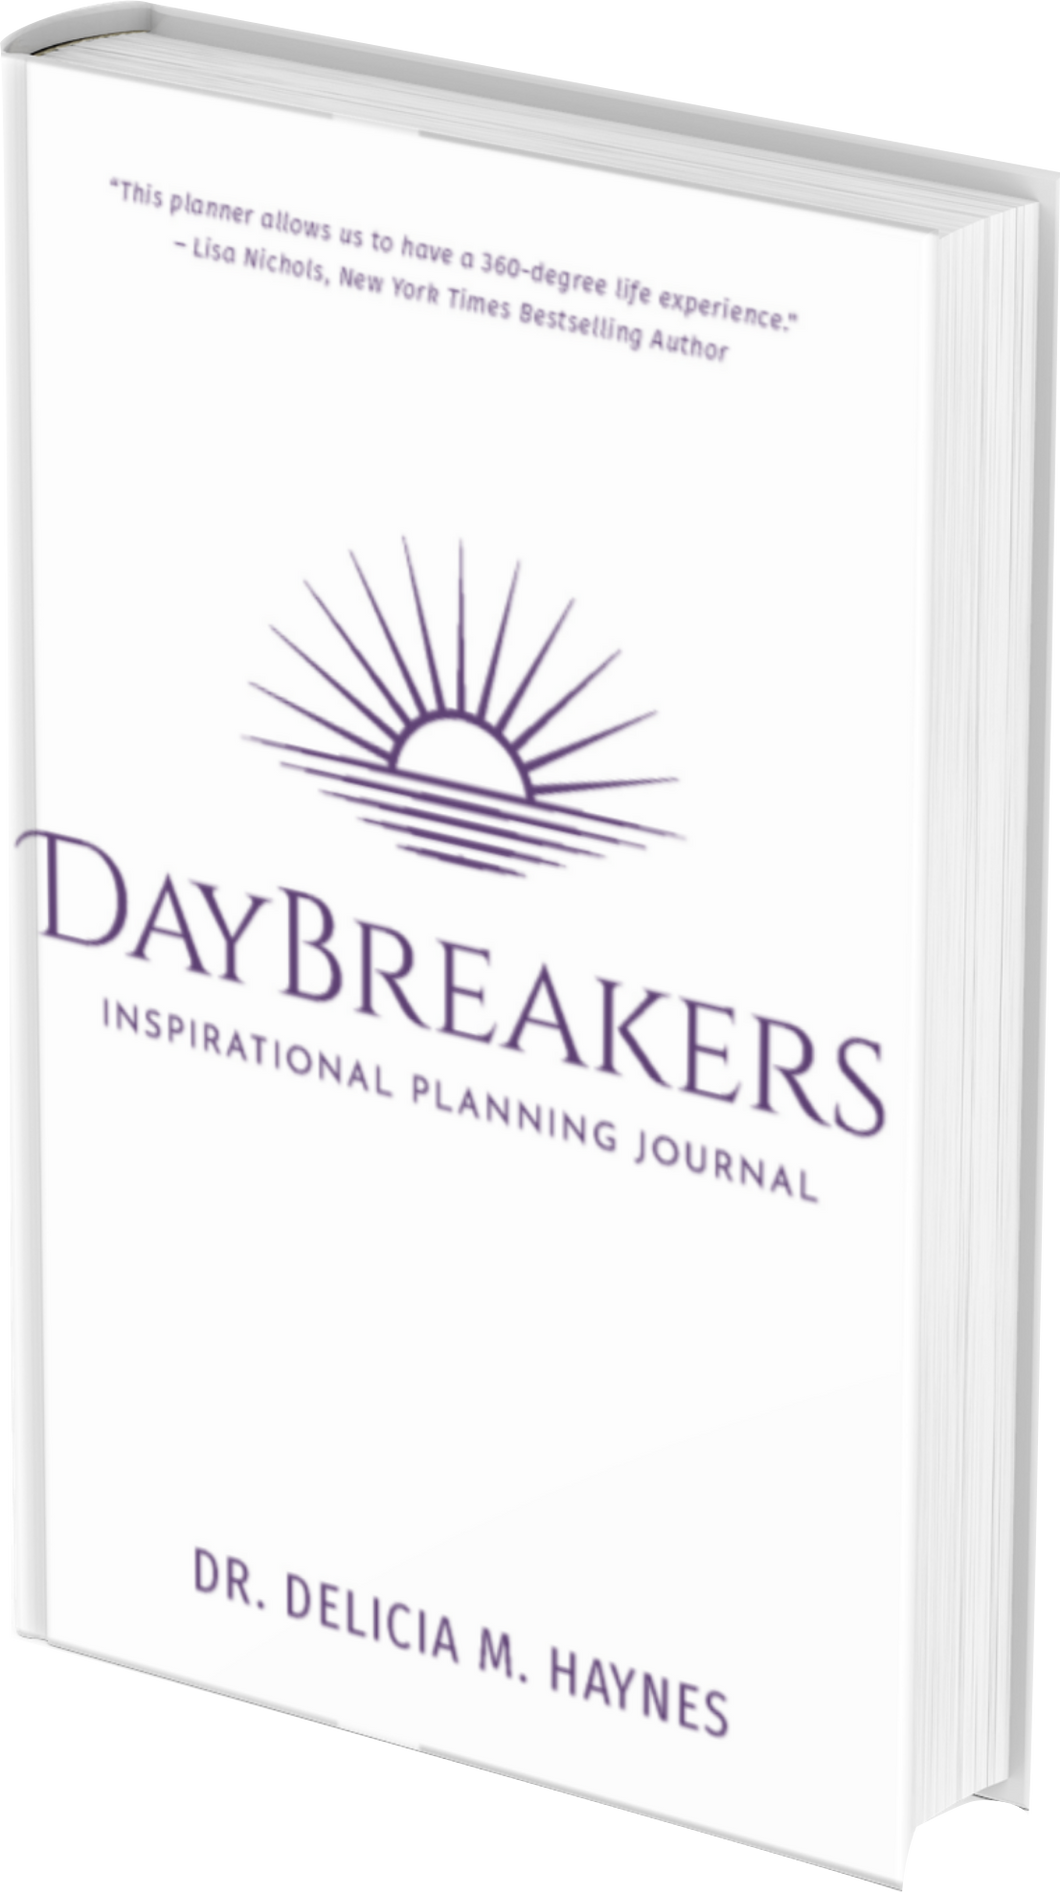 DayBreakers Planner